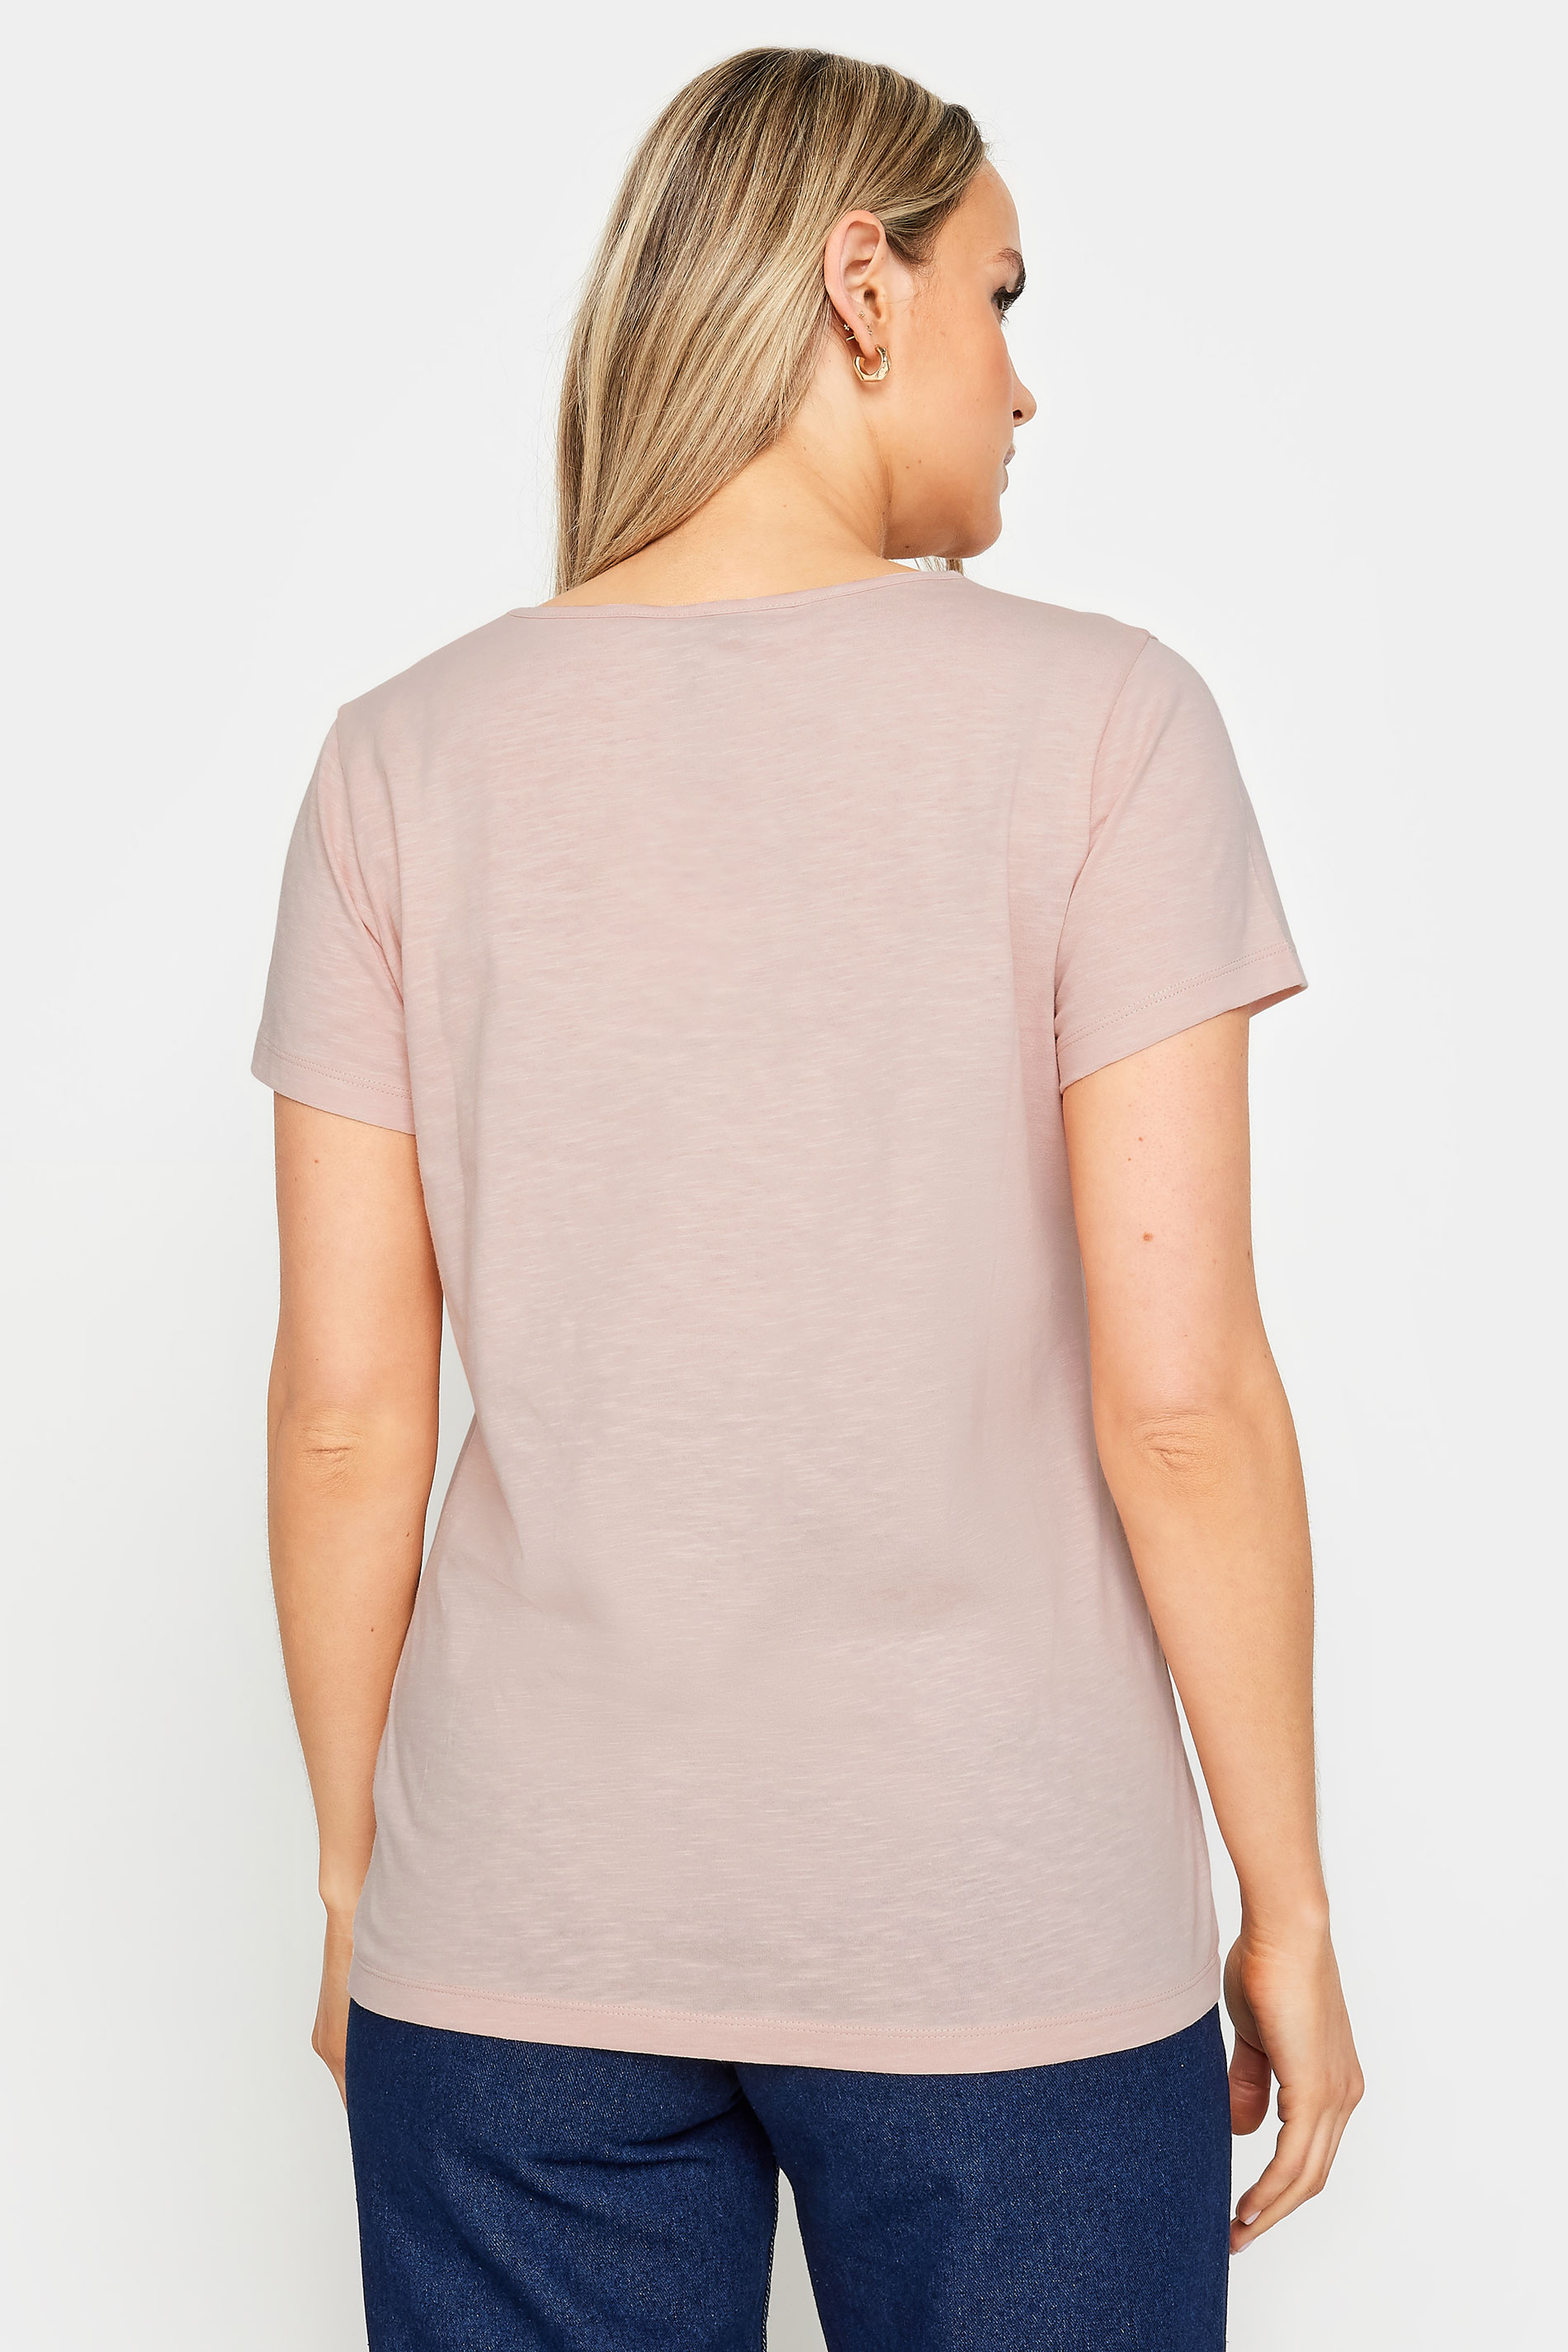 LTS Tall Womens Blush Pink Cotton T-Shirt | Long Tall Sally 3